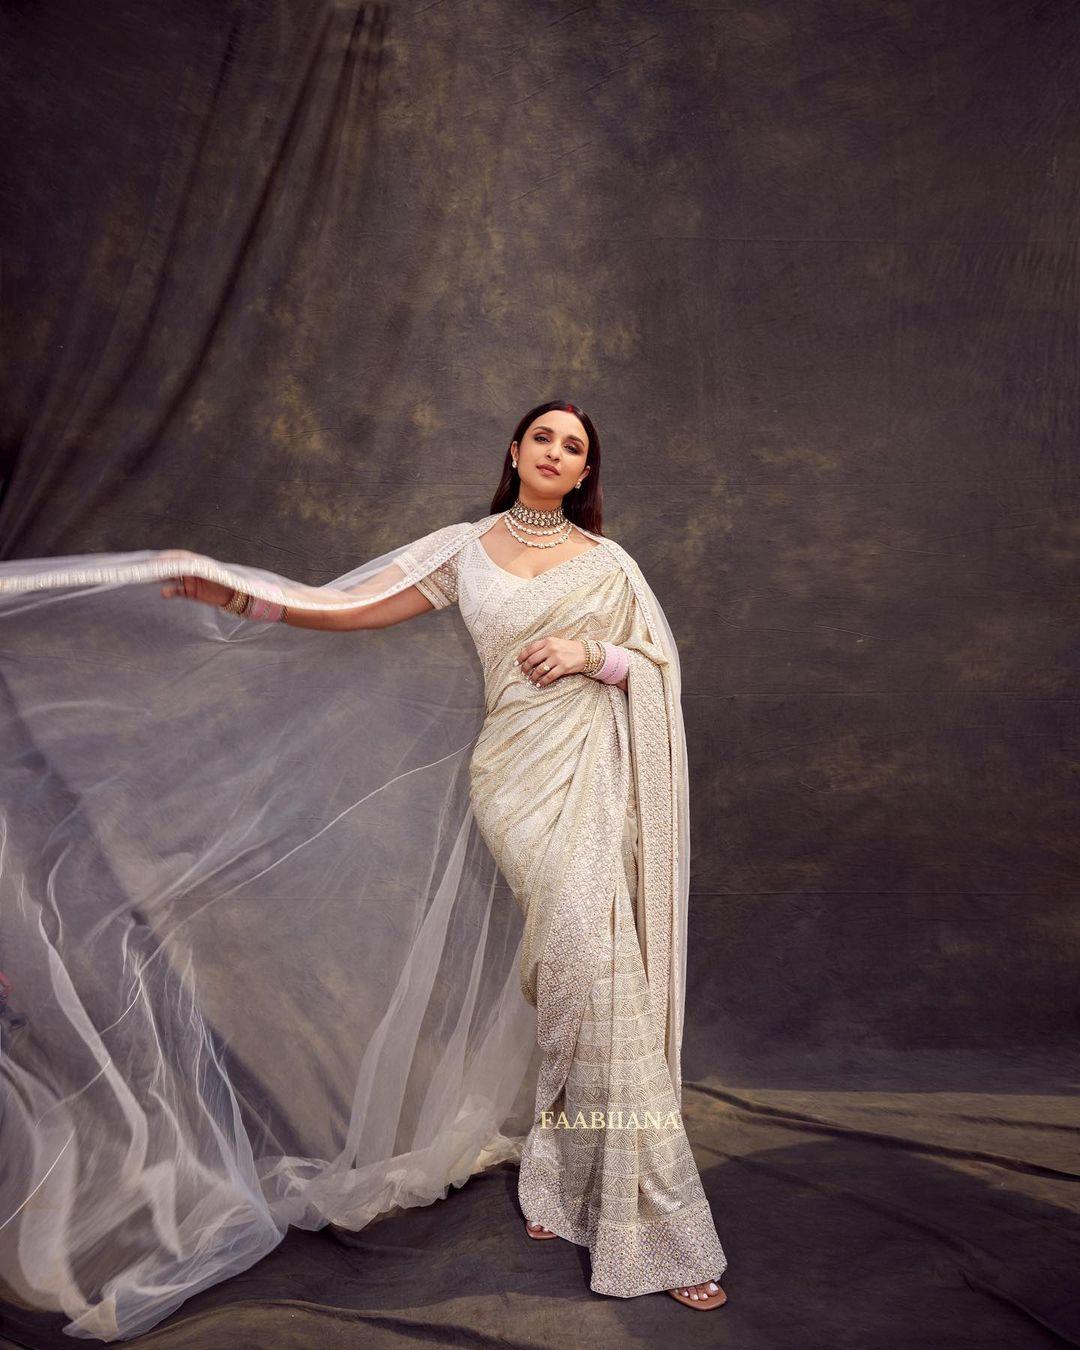 Parineeti Chopra looked like an angel this Lakme Fashion Week in this ivory saree